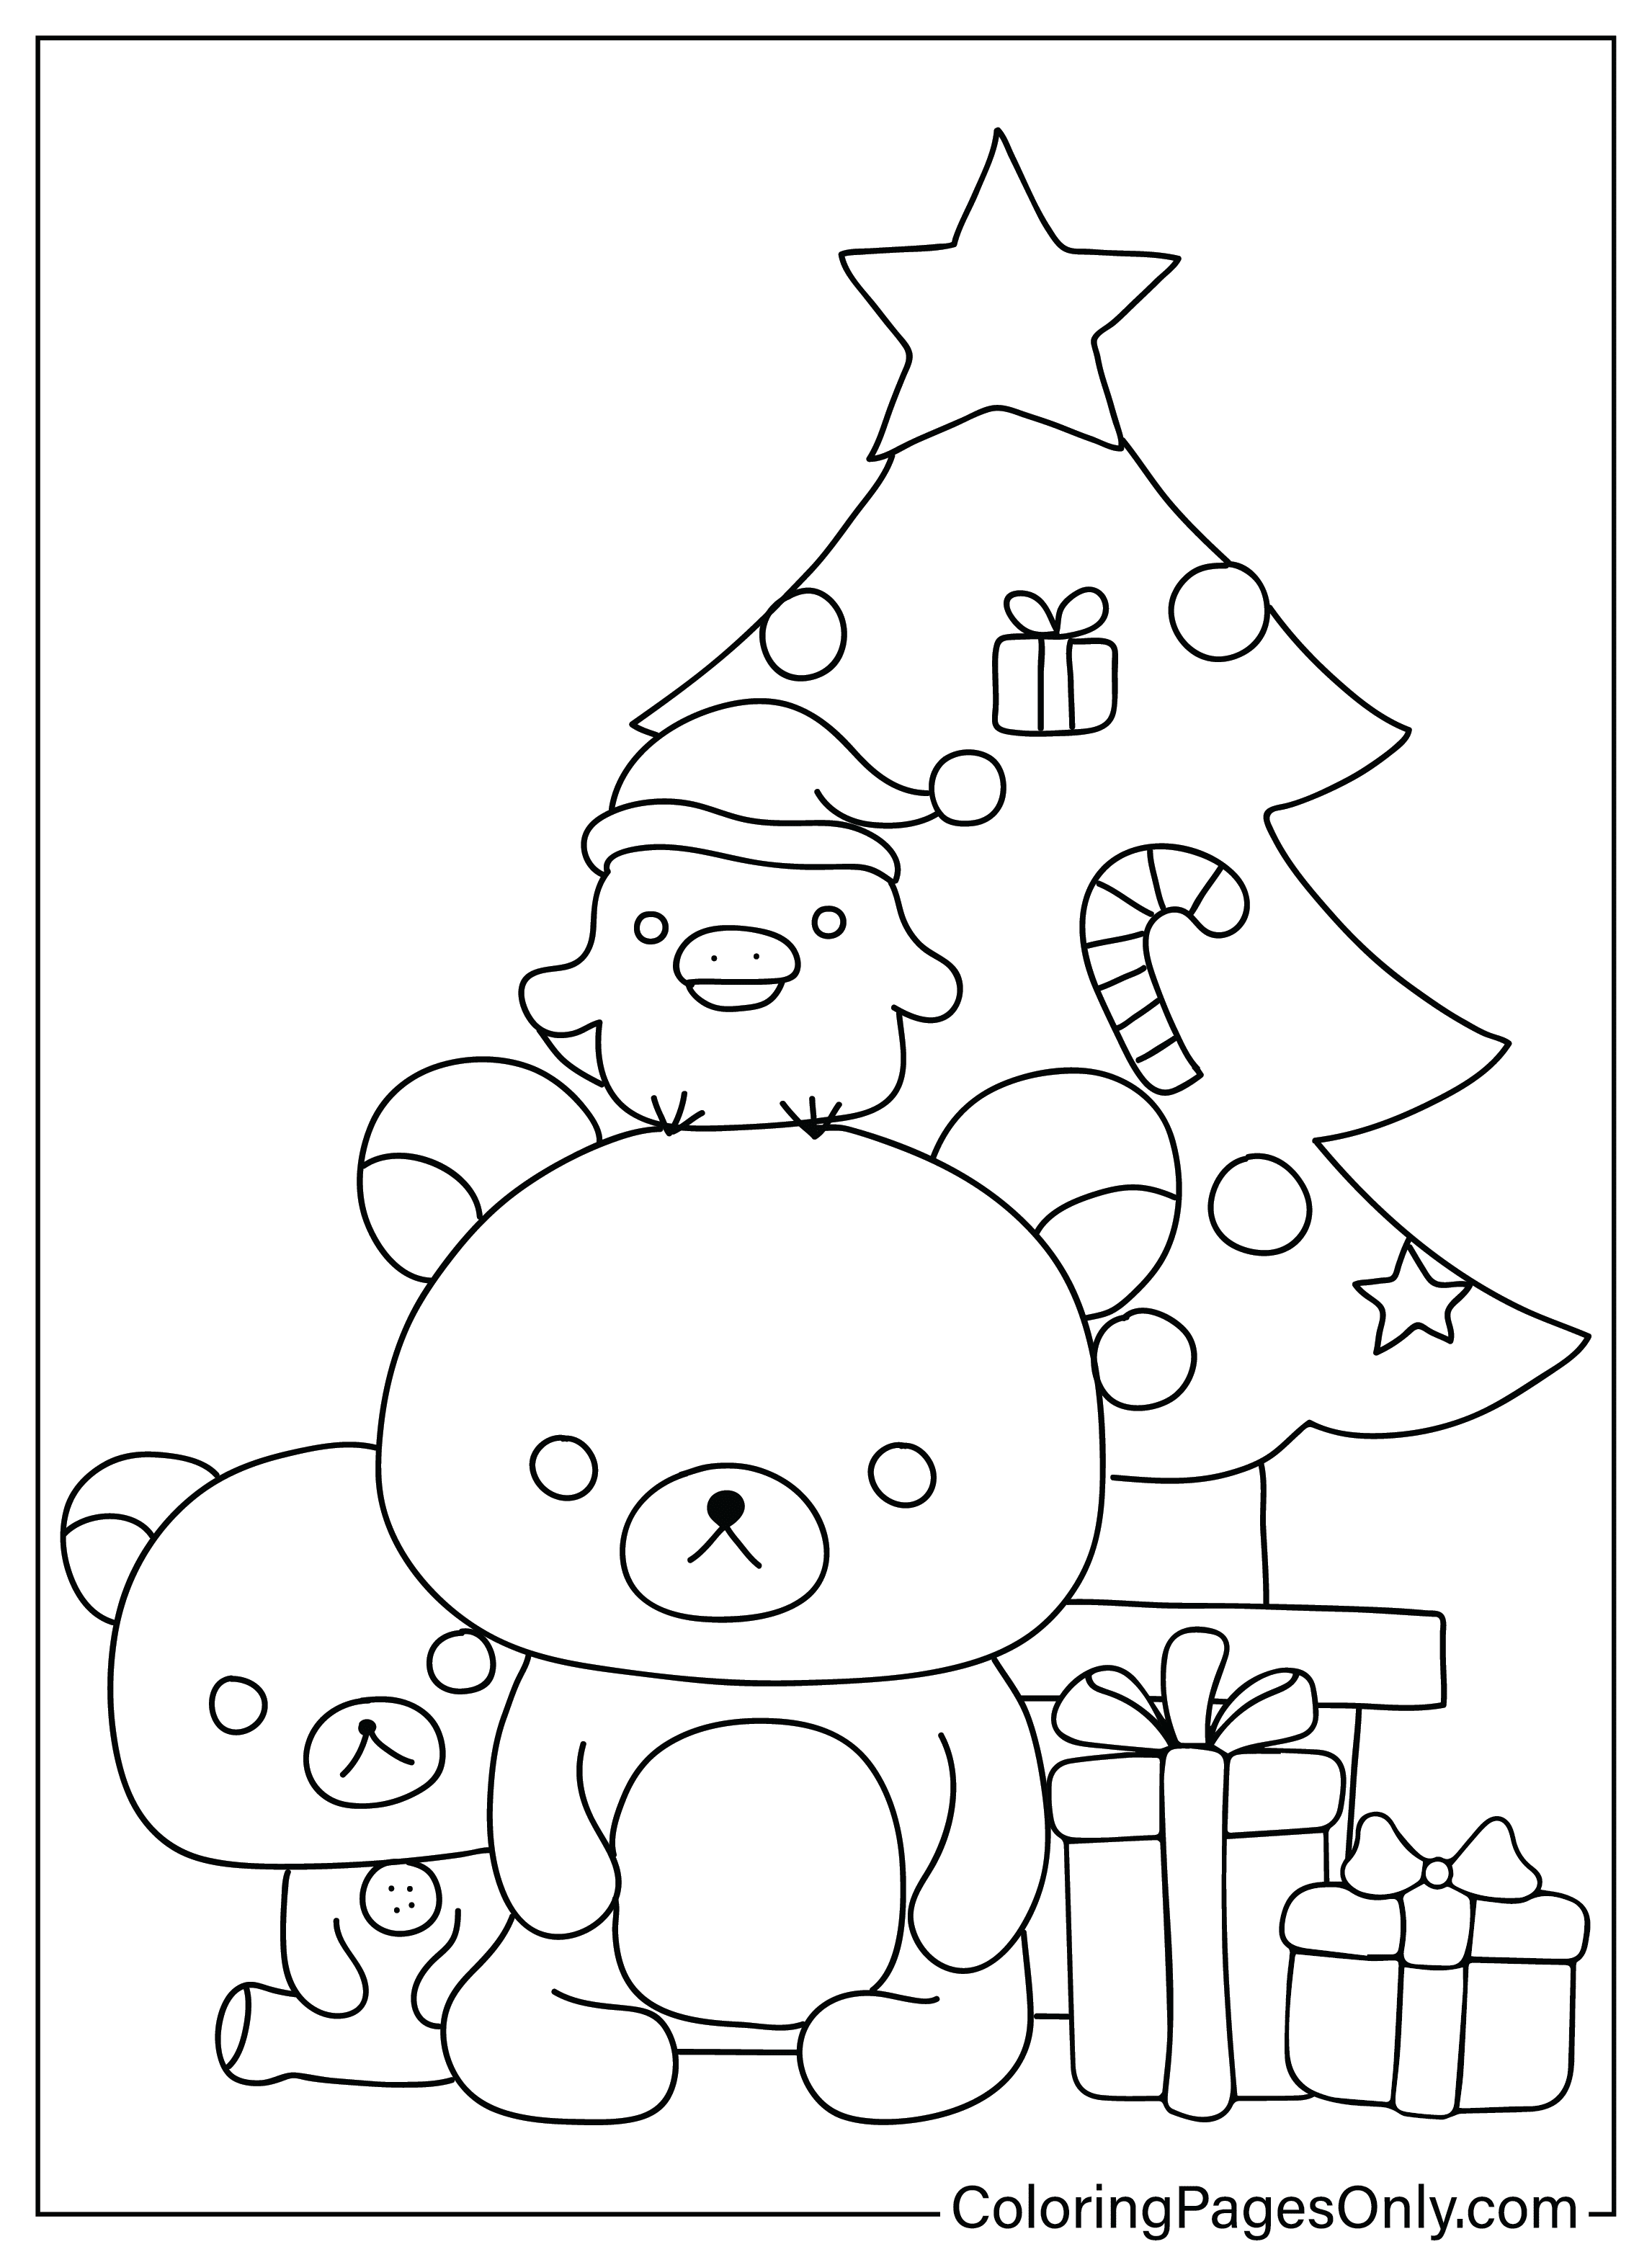 Christmas Cartoon Coloring Page Free from Christmas Cartoon